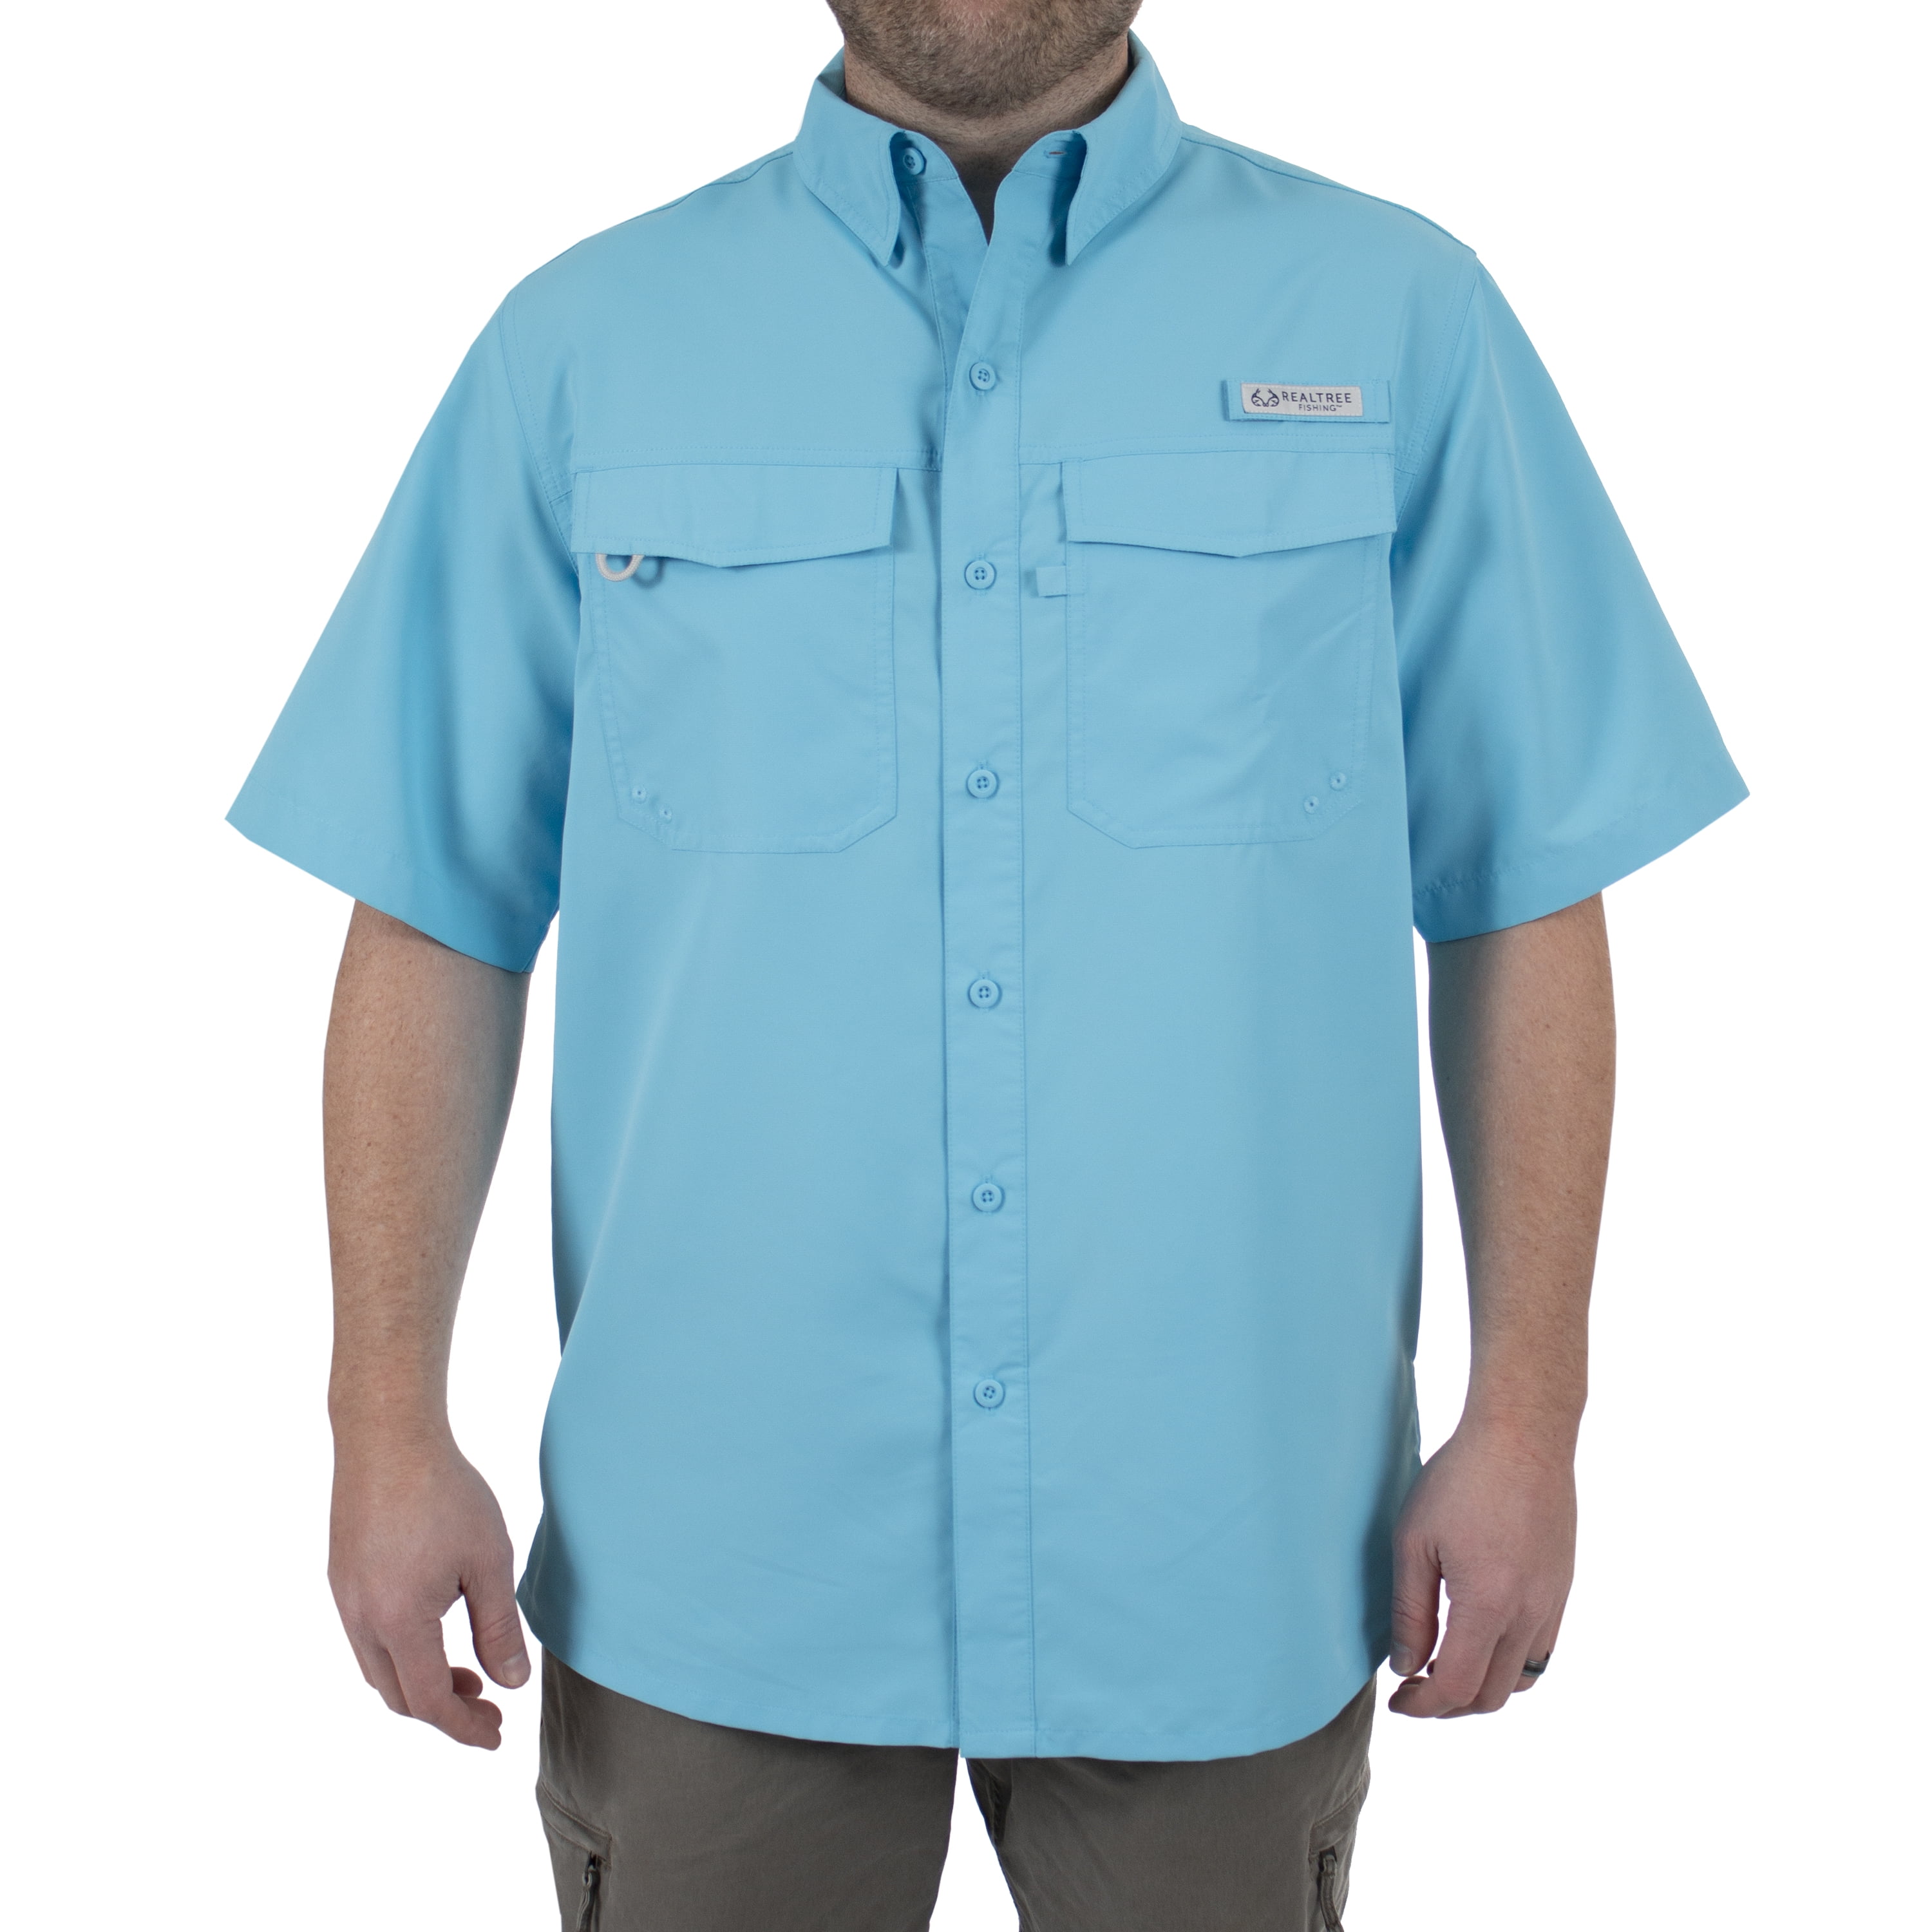 Realtree Men's Short Sleeve River Fishing Shirt 